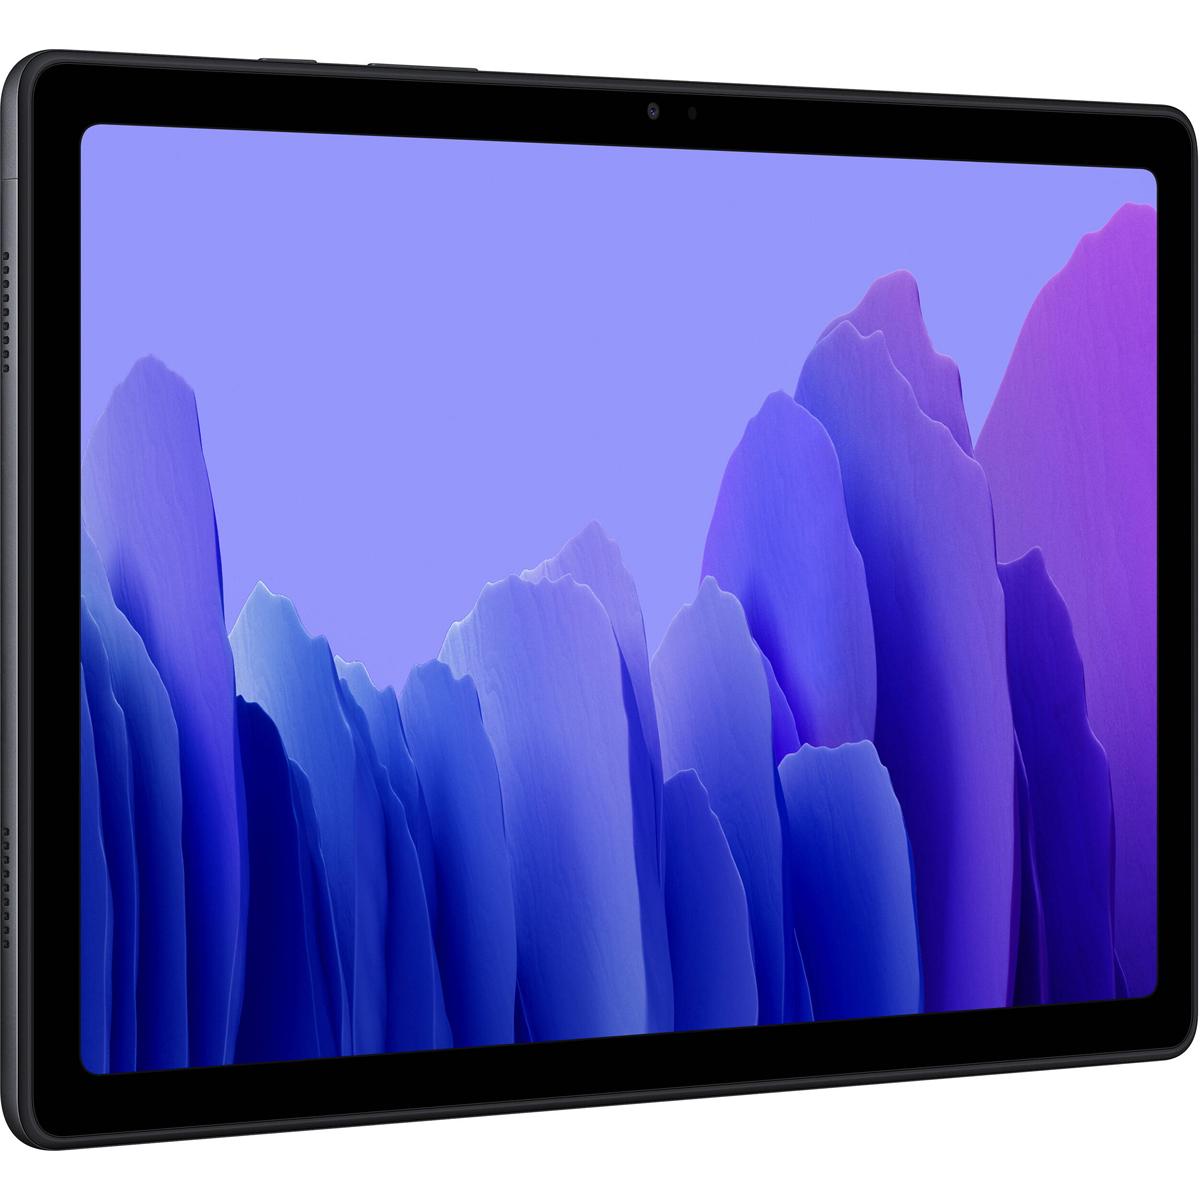 Samsung Galaxy Tab A7 SM-T500 32GB Wi-Fi Tablet for $149.99 Shipped